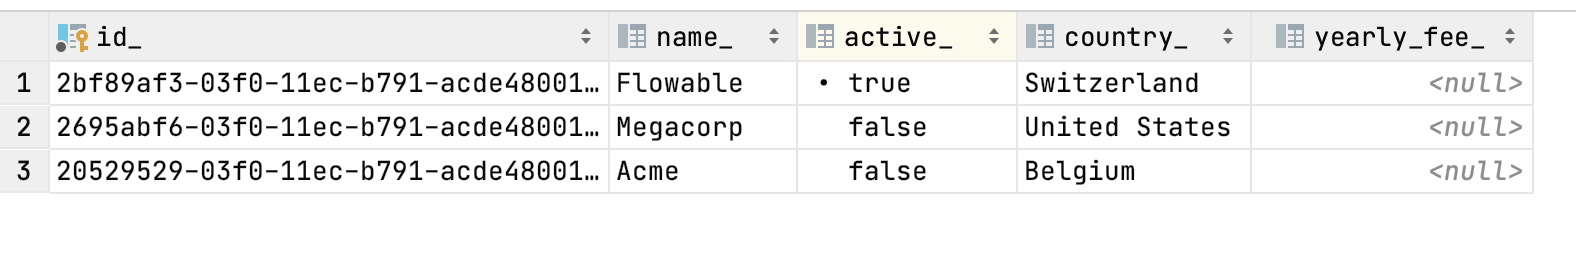 Data Object CMMN Example